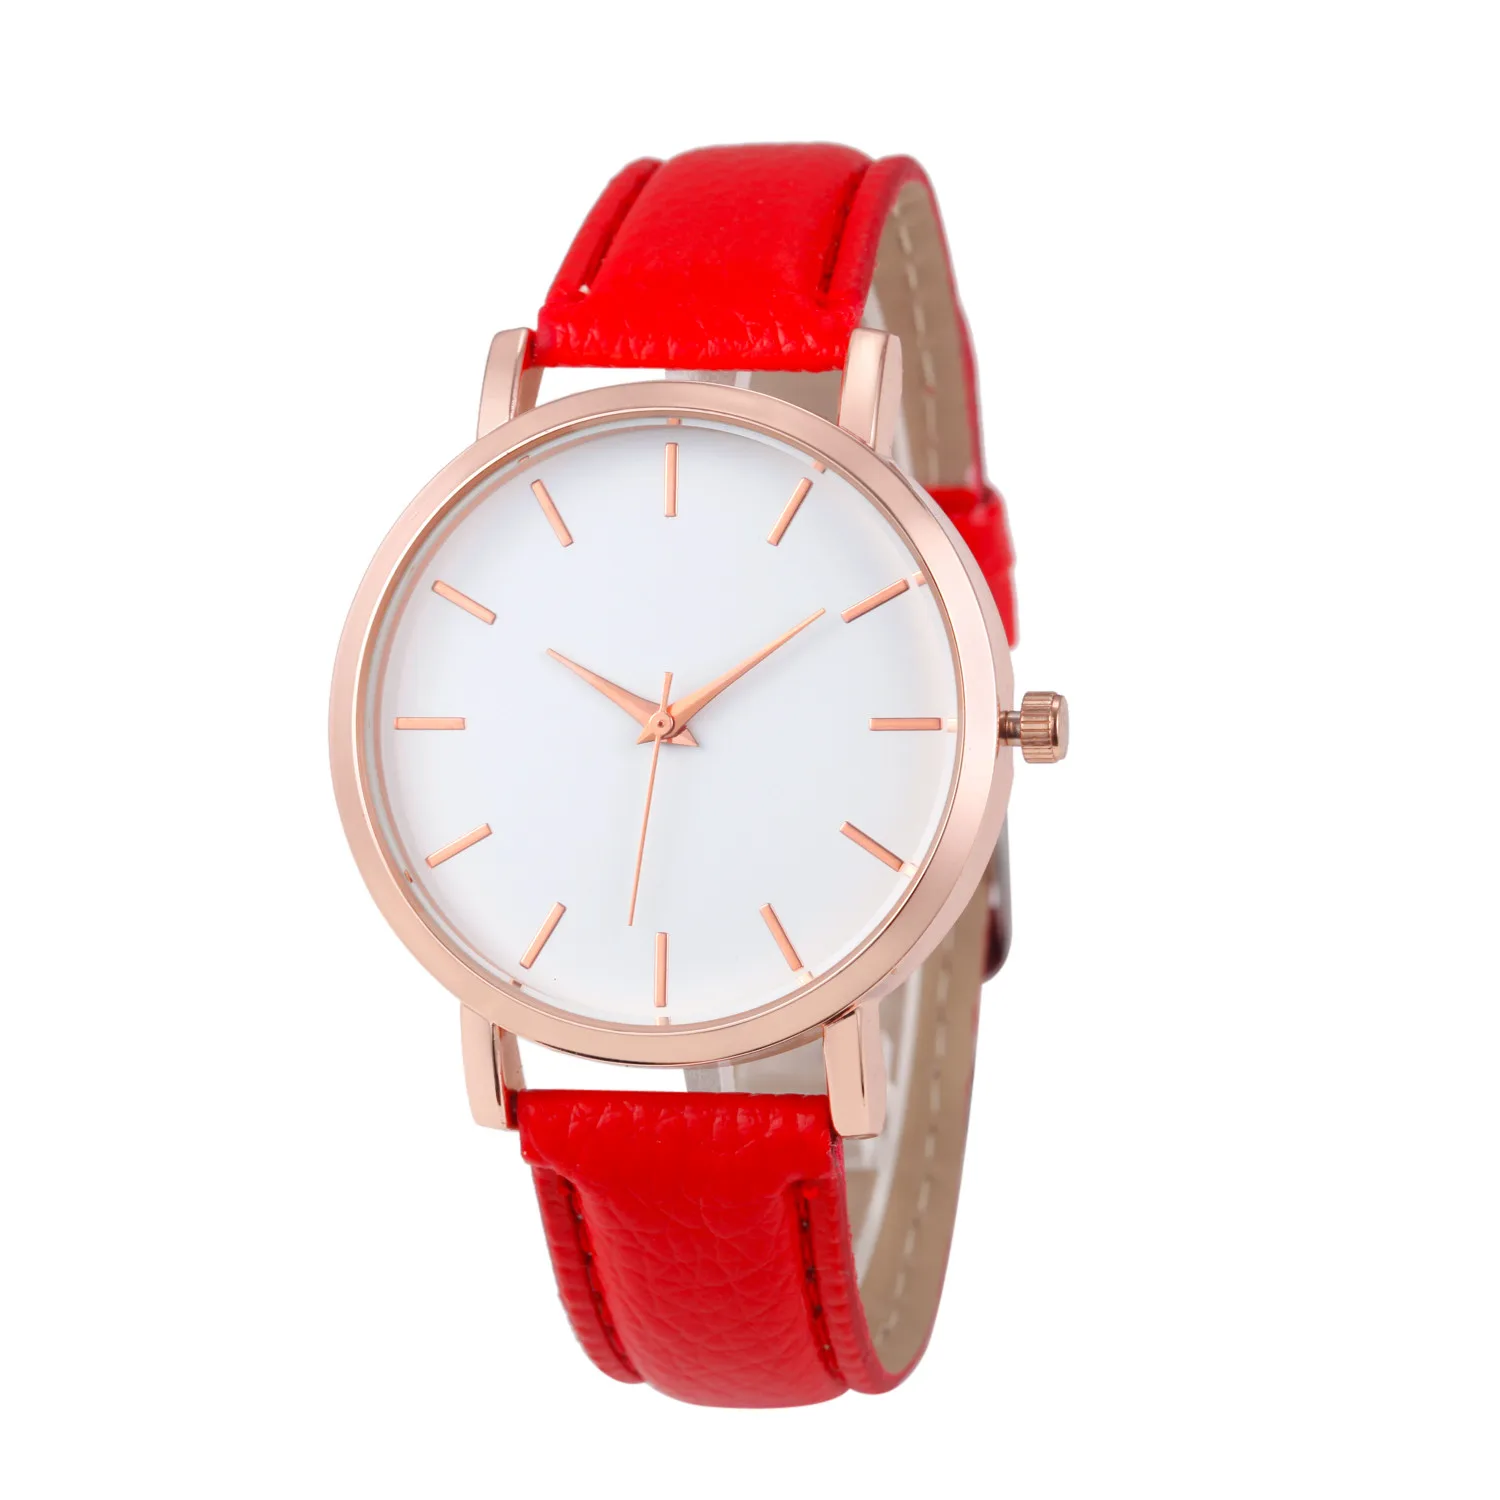 Fashion Watches Women PU Leather Men Women Steel Dial Clock Analog Quartz Wrist Watch Relogio Feminino 2017 New Sale